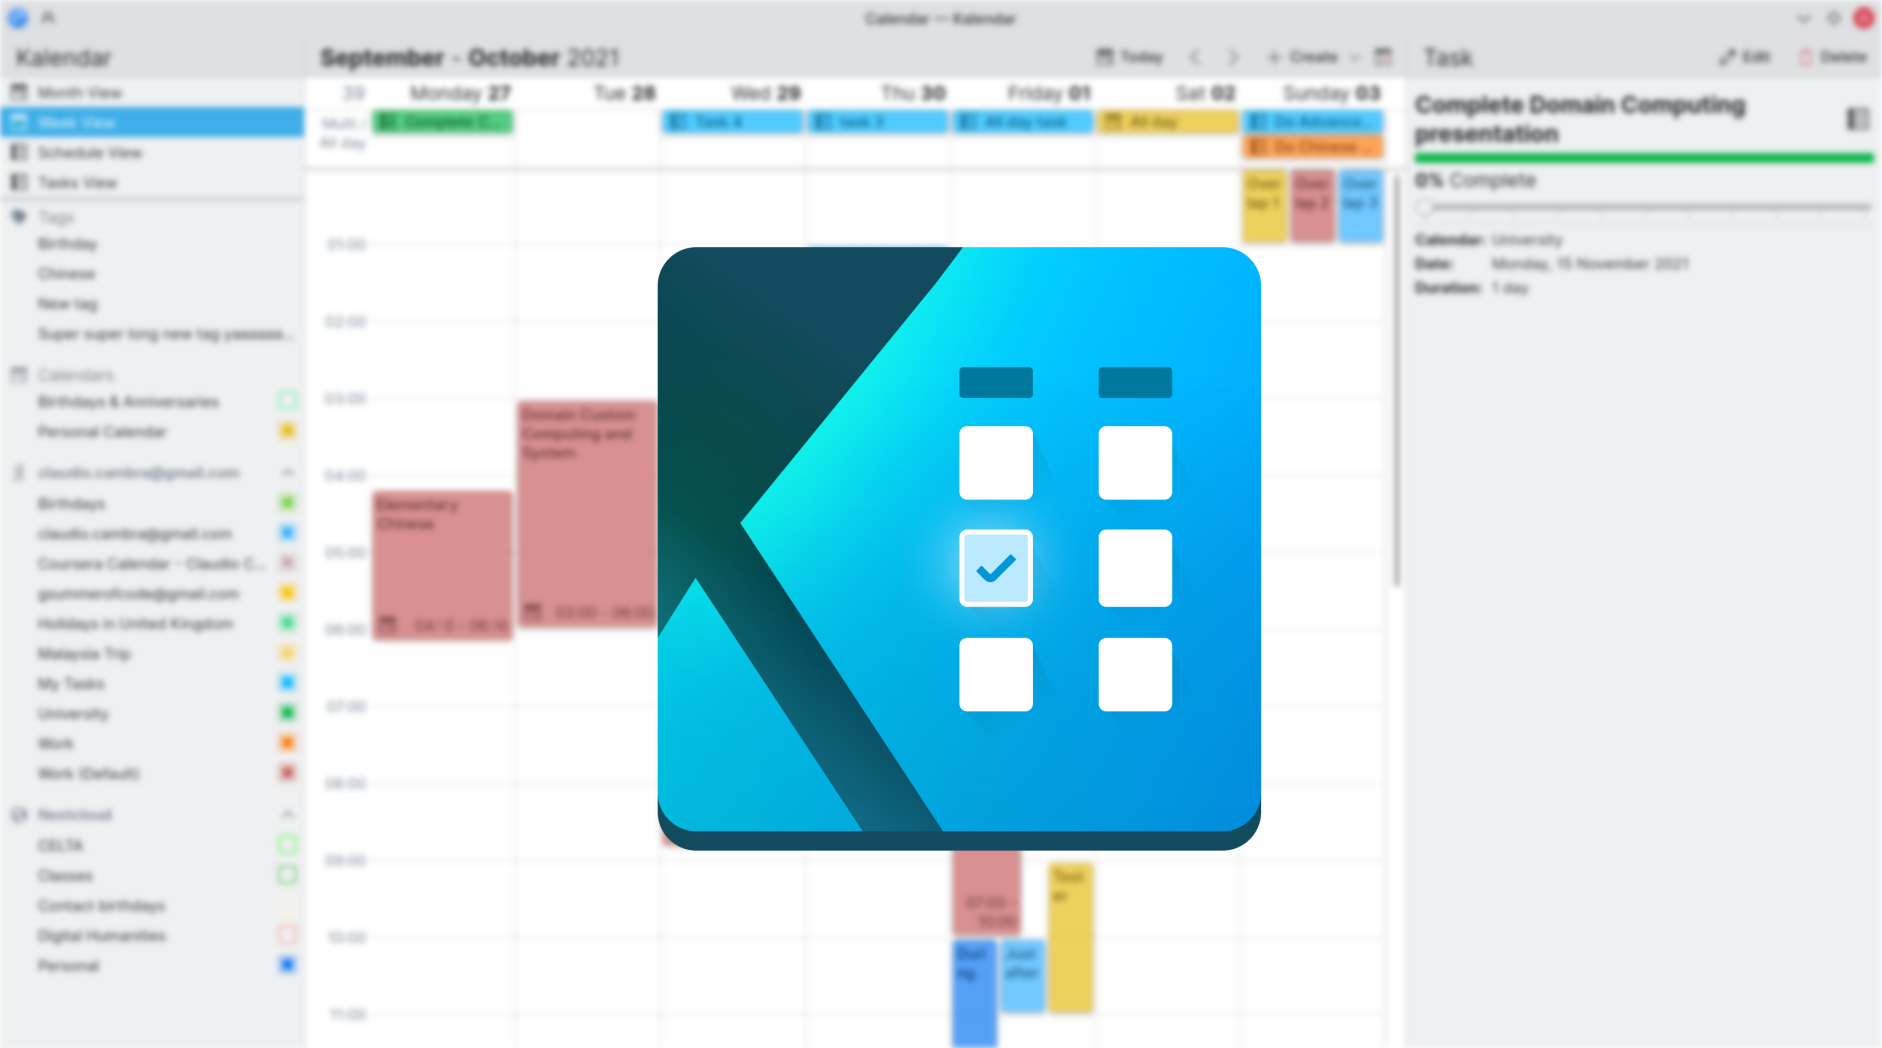 Getting ready for KDE review — Kalendar devlog 18